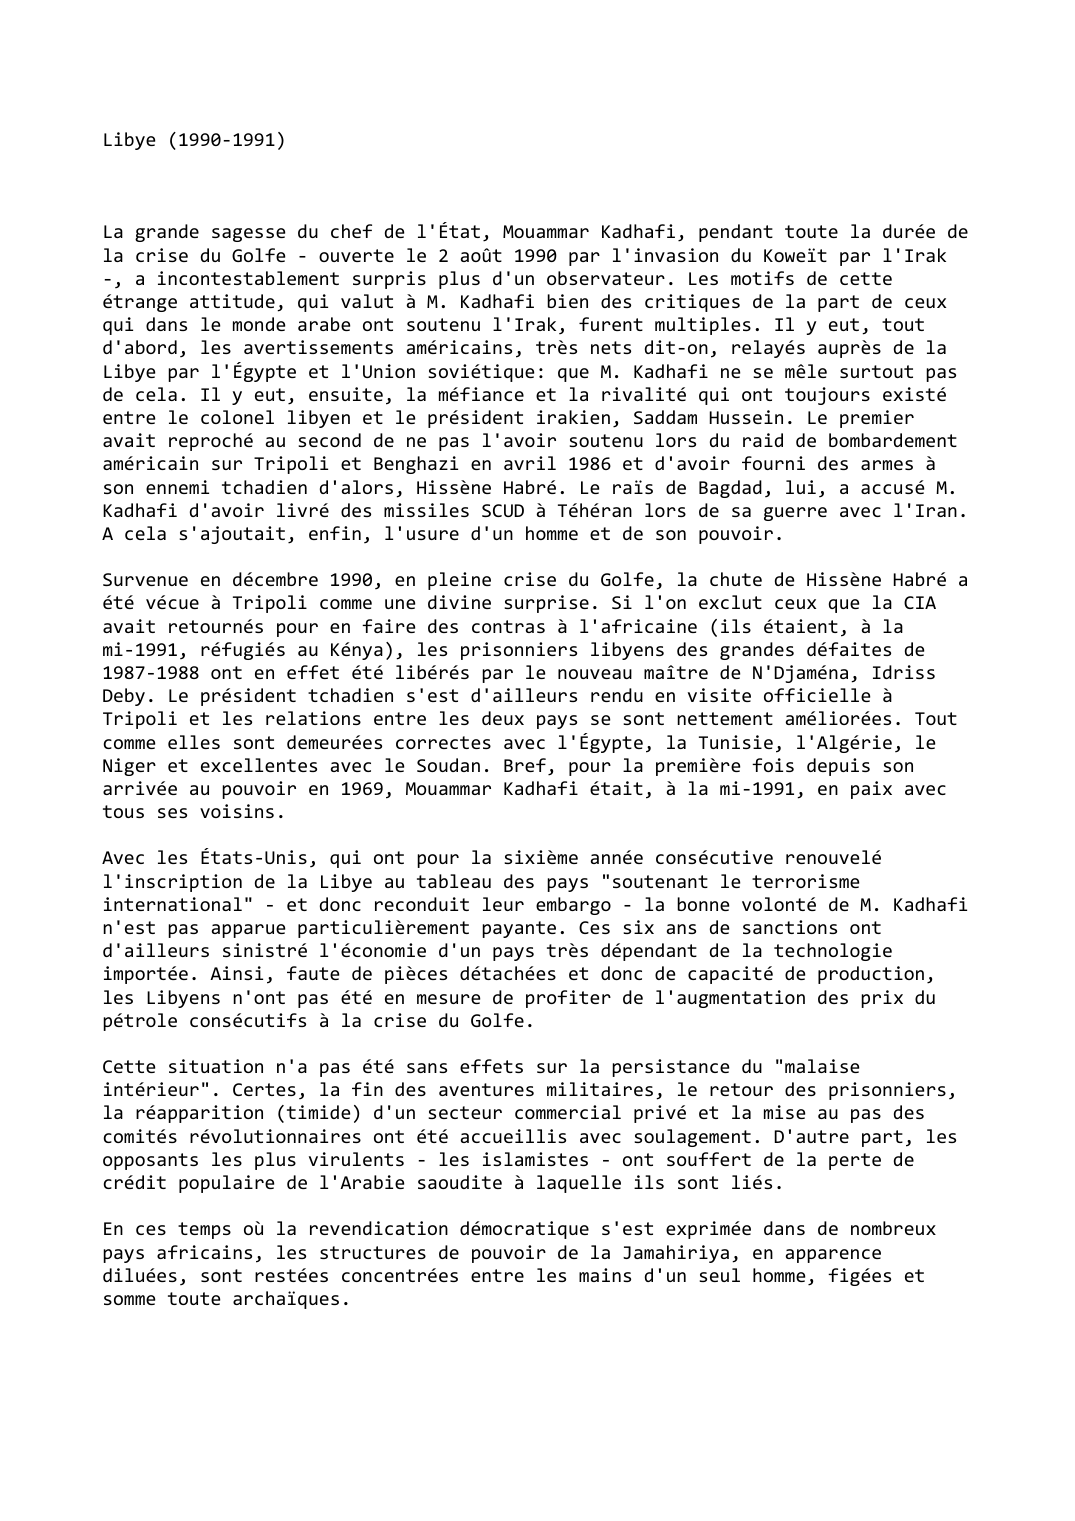 Prévisualisation du document Libye (1990-1991)